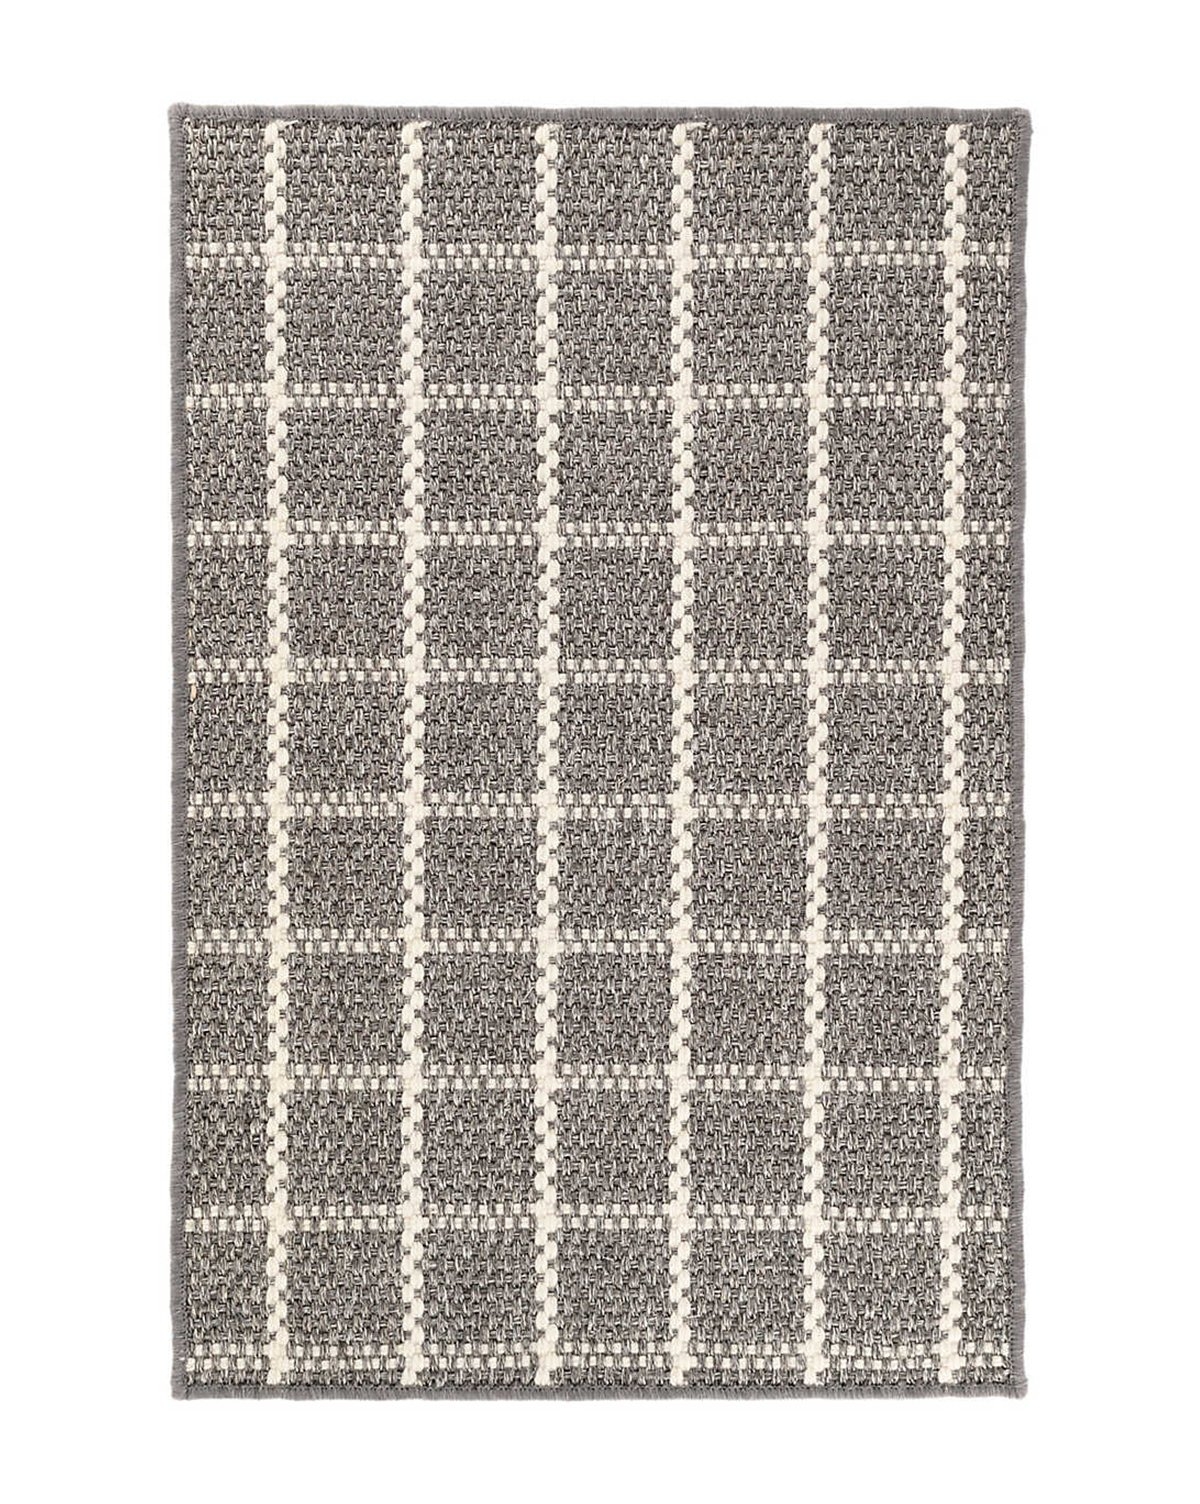 FRAMEWORK GRAY WOVEN SISAL RUG, 9' x 12' - Image 0